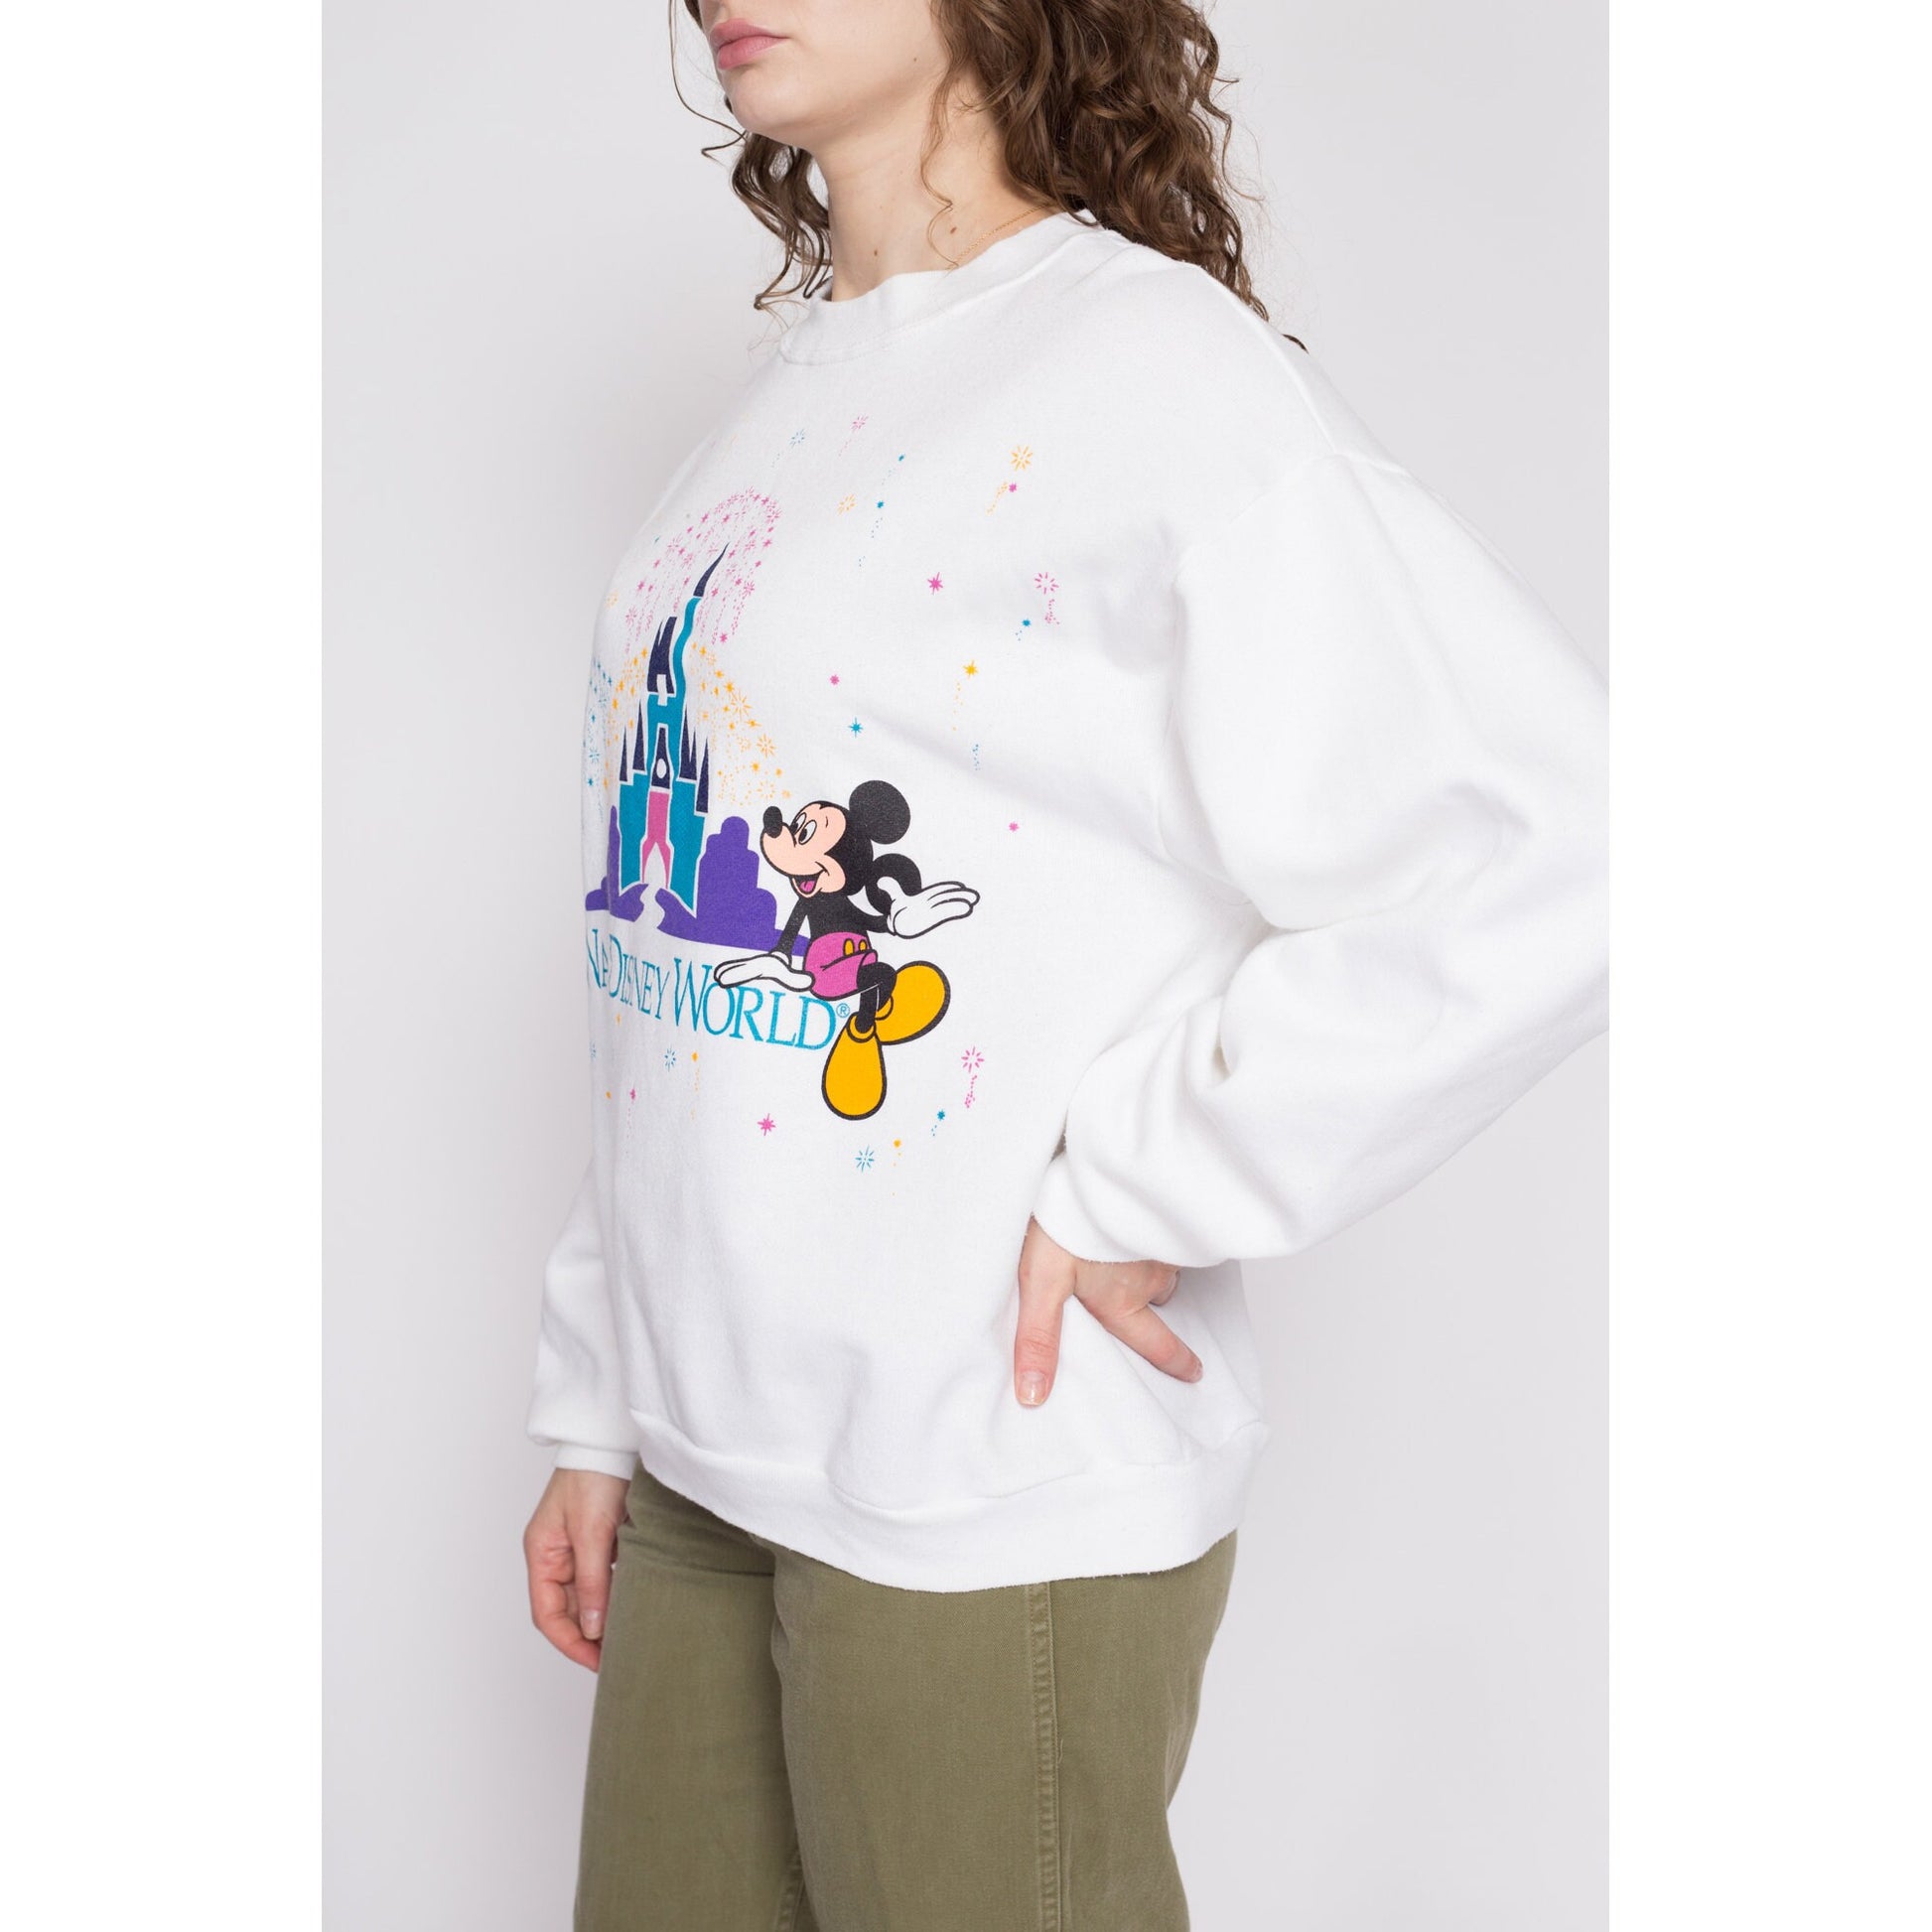 OFFICIAL DISNEY LADIES Mickey Mouse & Friends 90's Sweatshirt White S - XL  £14.99 - PicClick UK